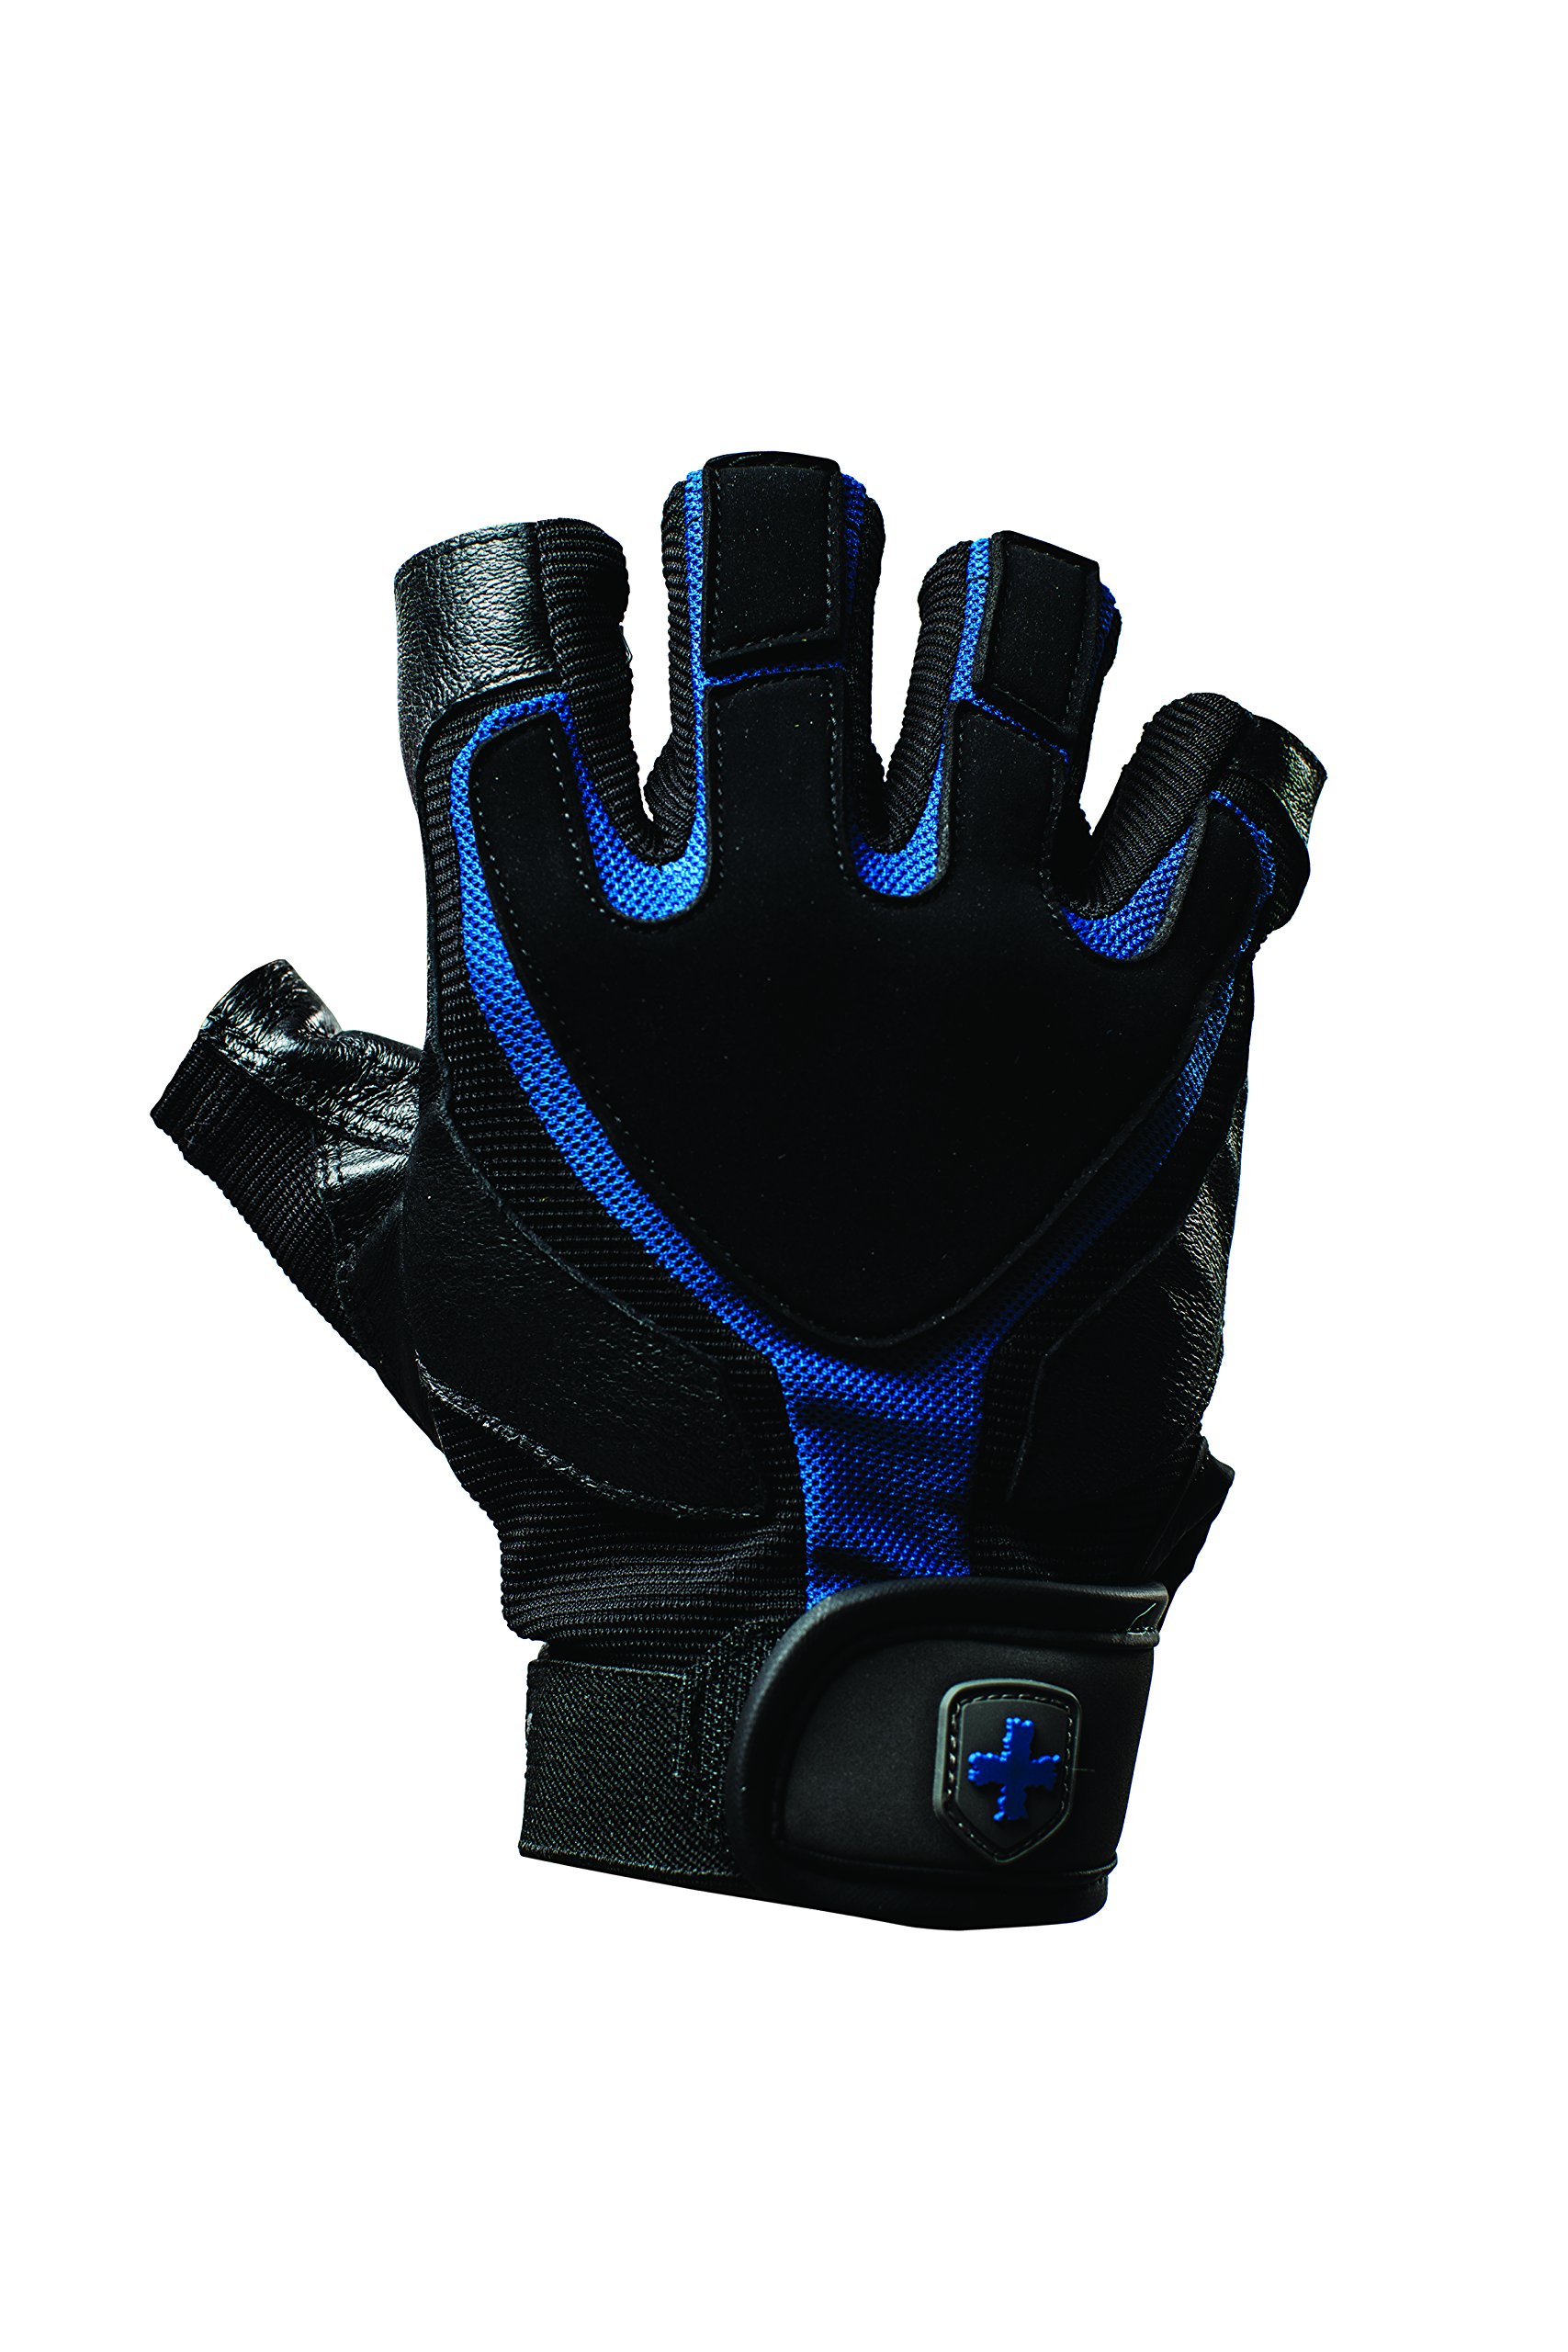 Harbinger Training Grip Weightlifting Workout Gloves 2.0, Small Black/Blue  Men's X-Large